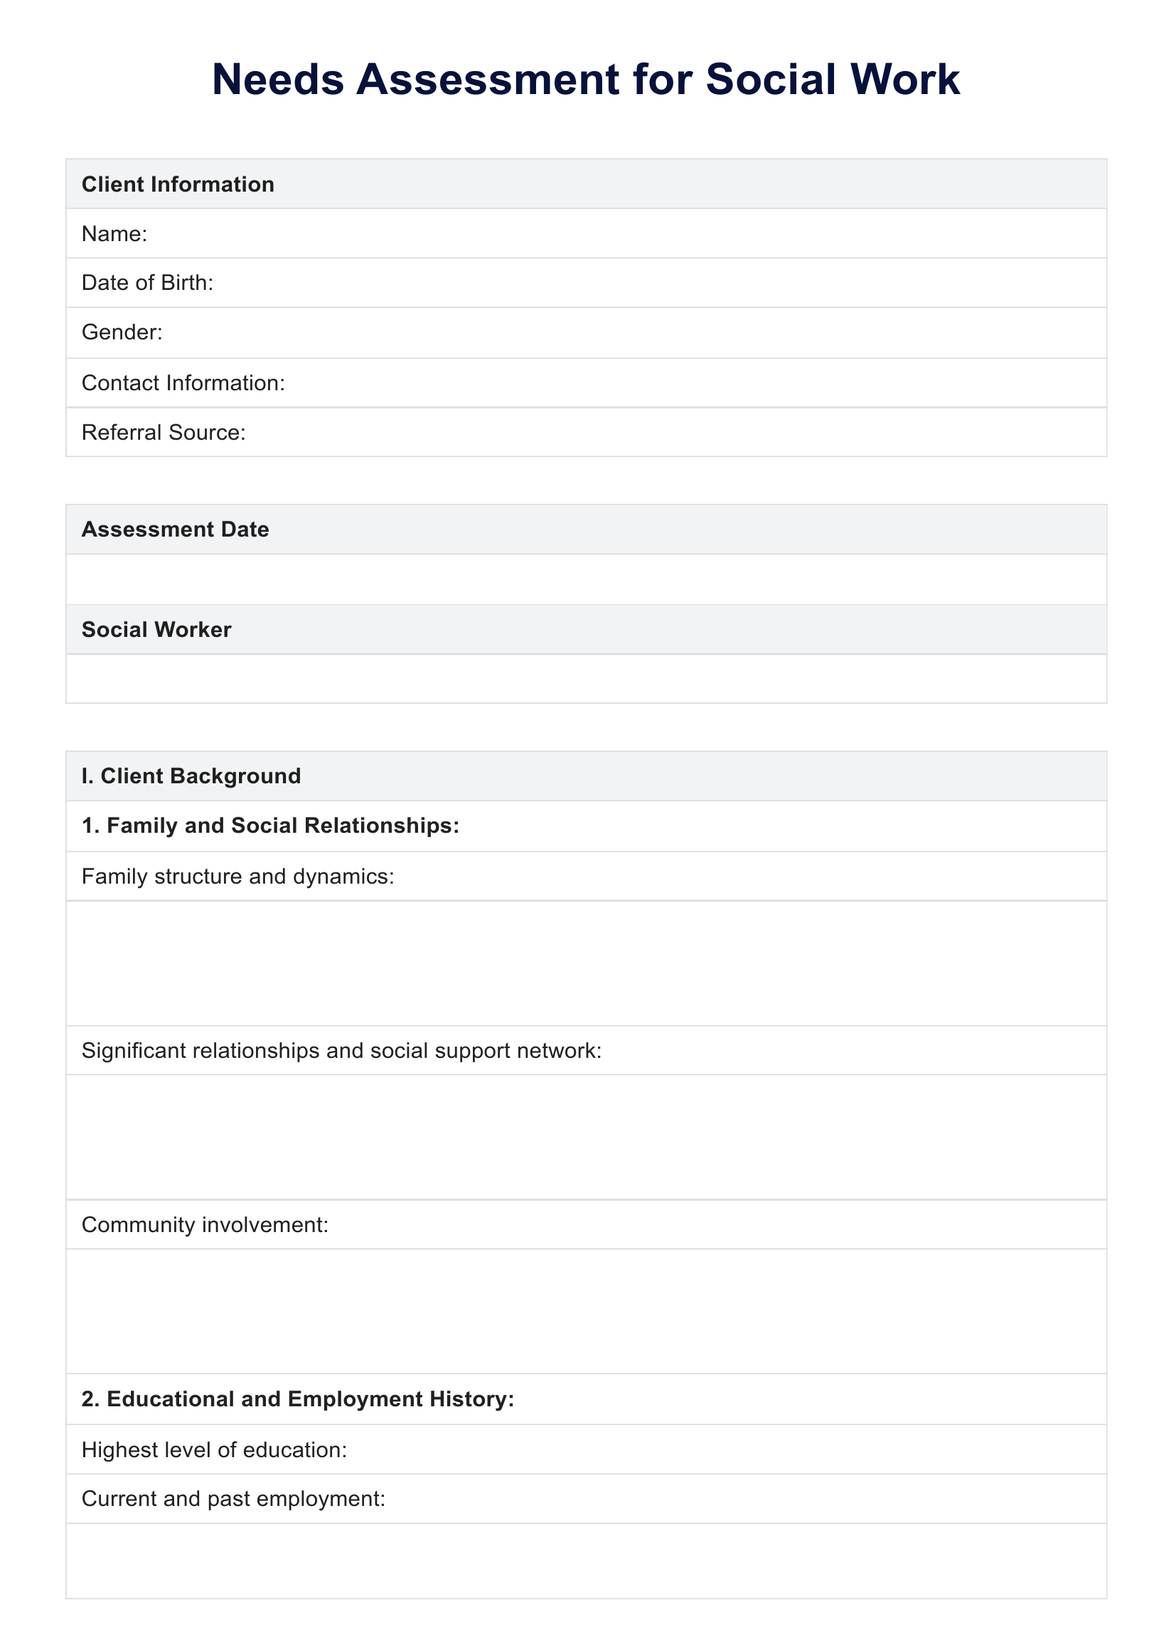 Needs Assessment Social Work PDF Example